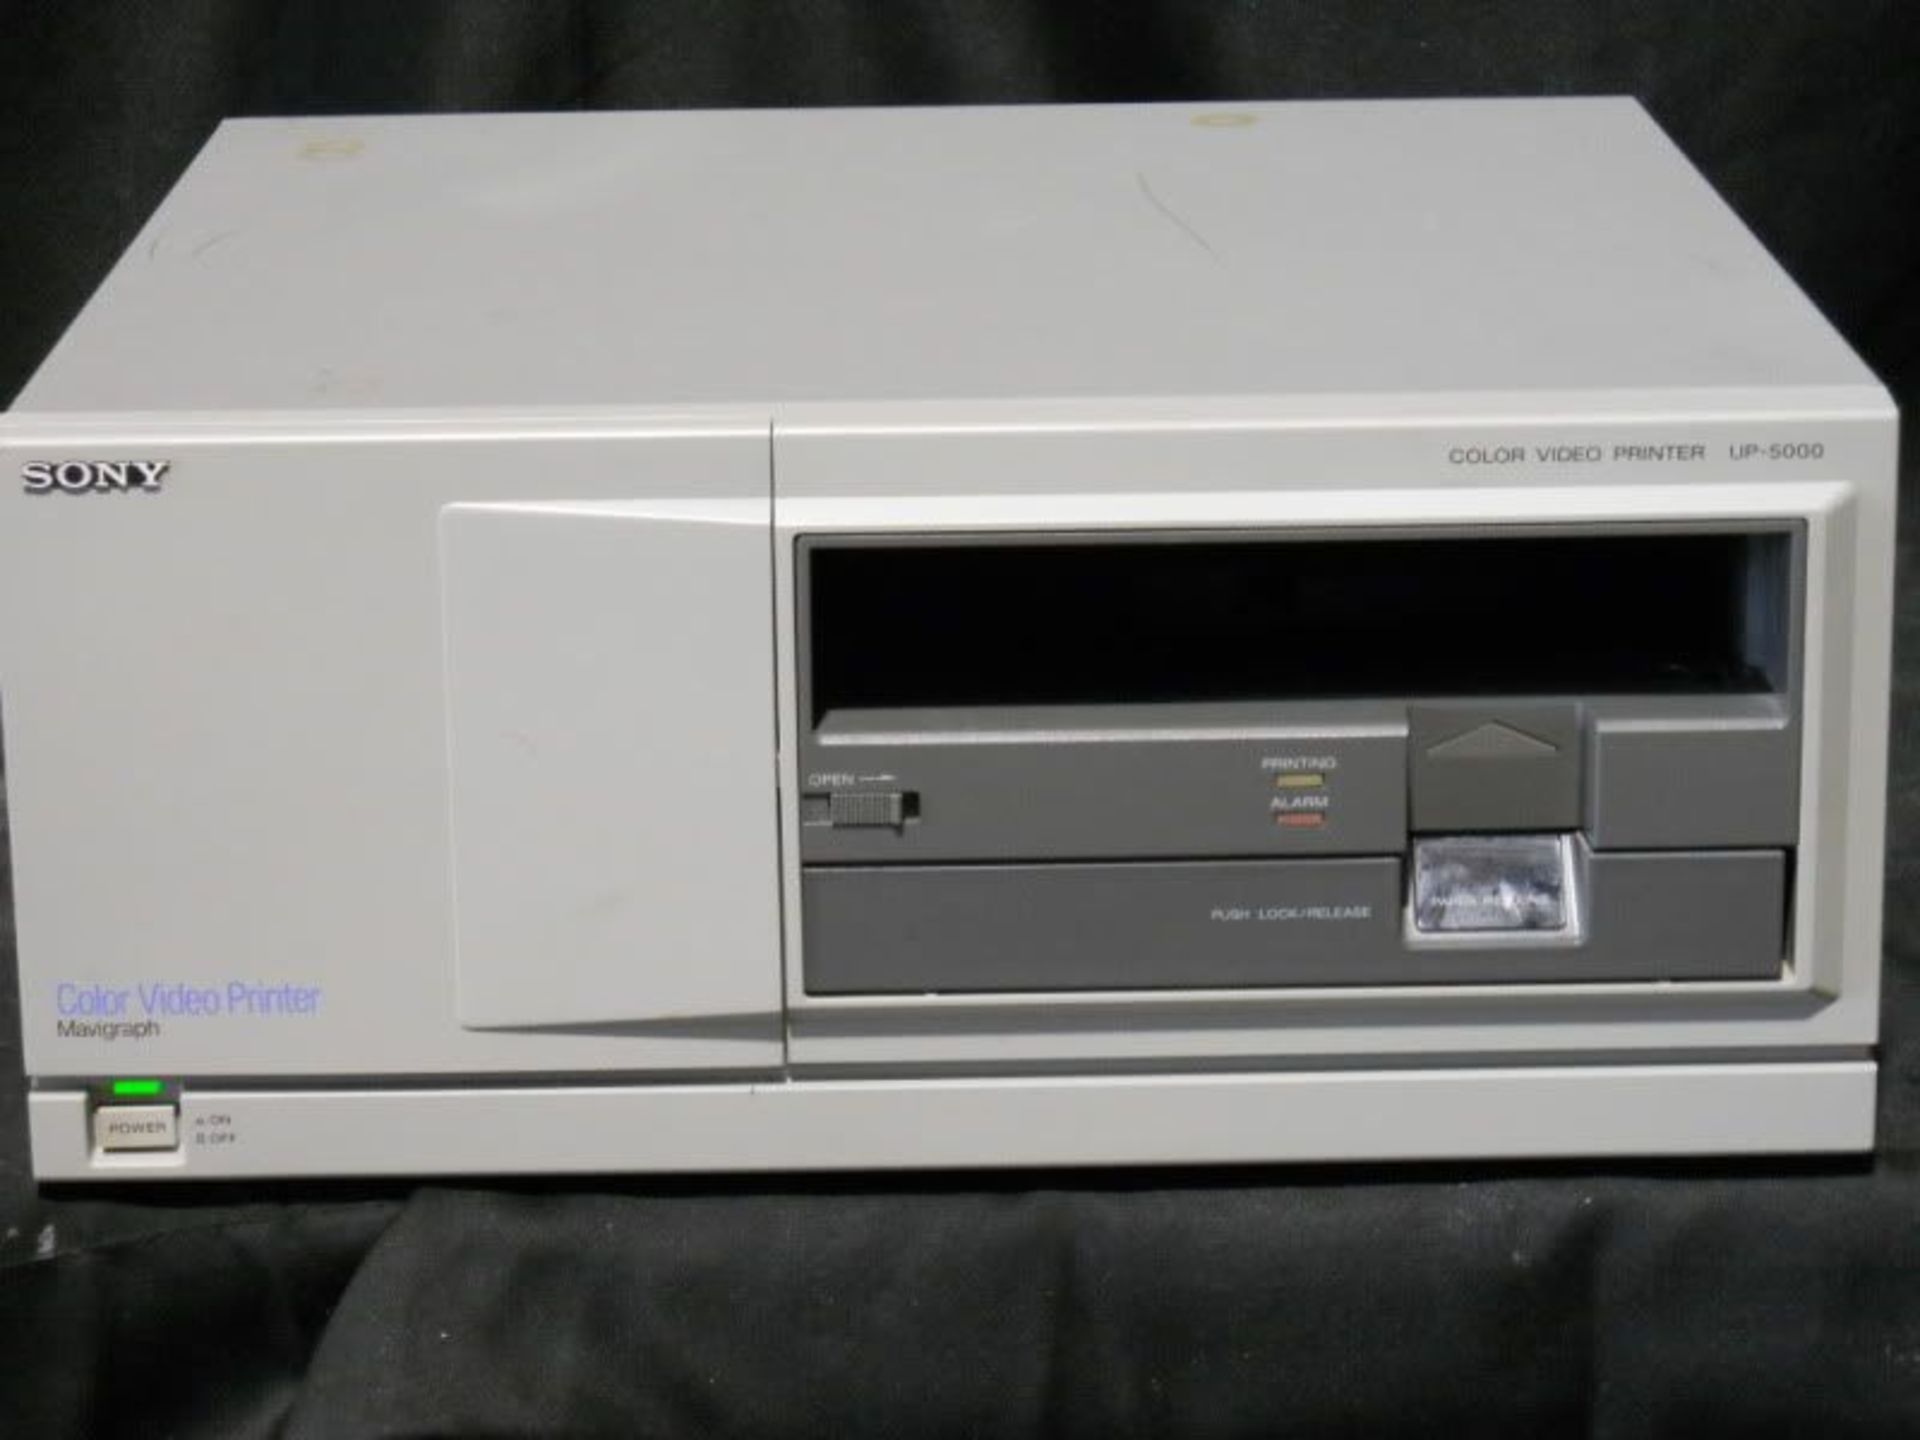 Sony Mavigraph Color Video Printer UP5000, Qty 1, 321469009610